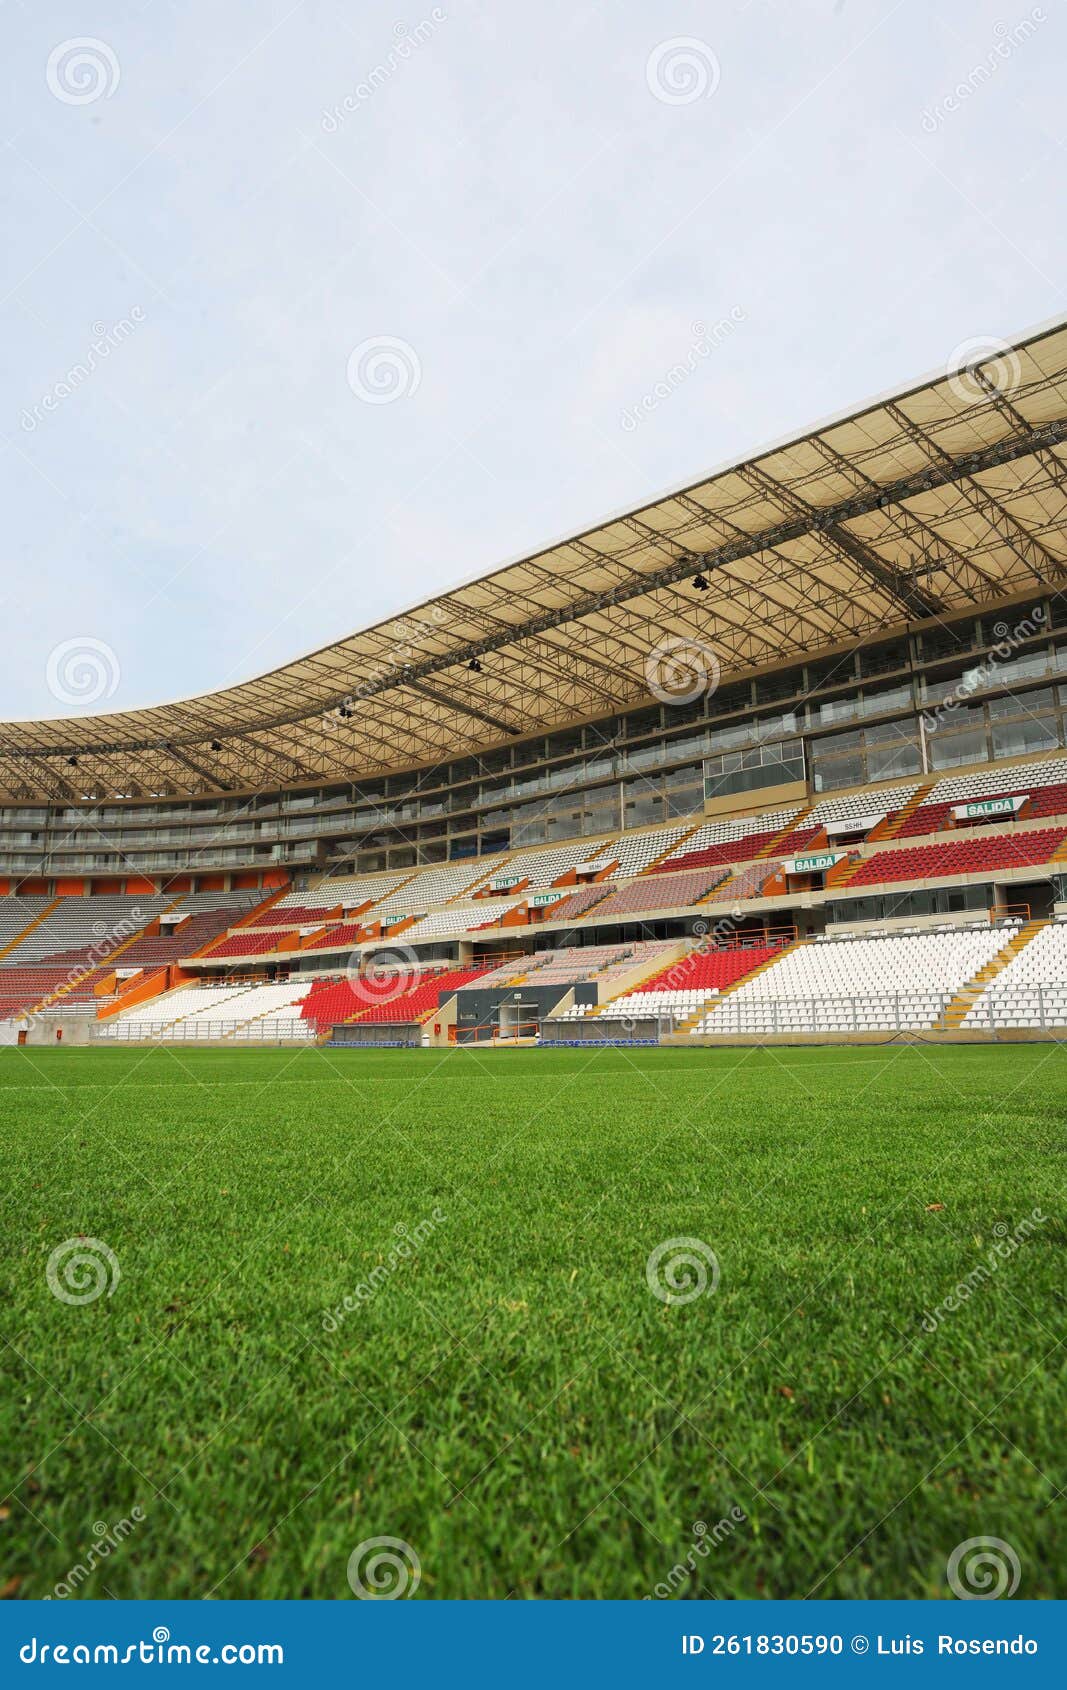 lima peru,new architecture of the field foodball soccer stadium- called national stadium